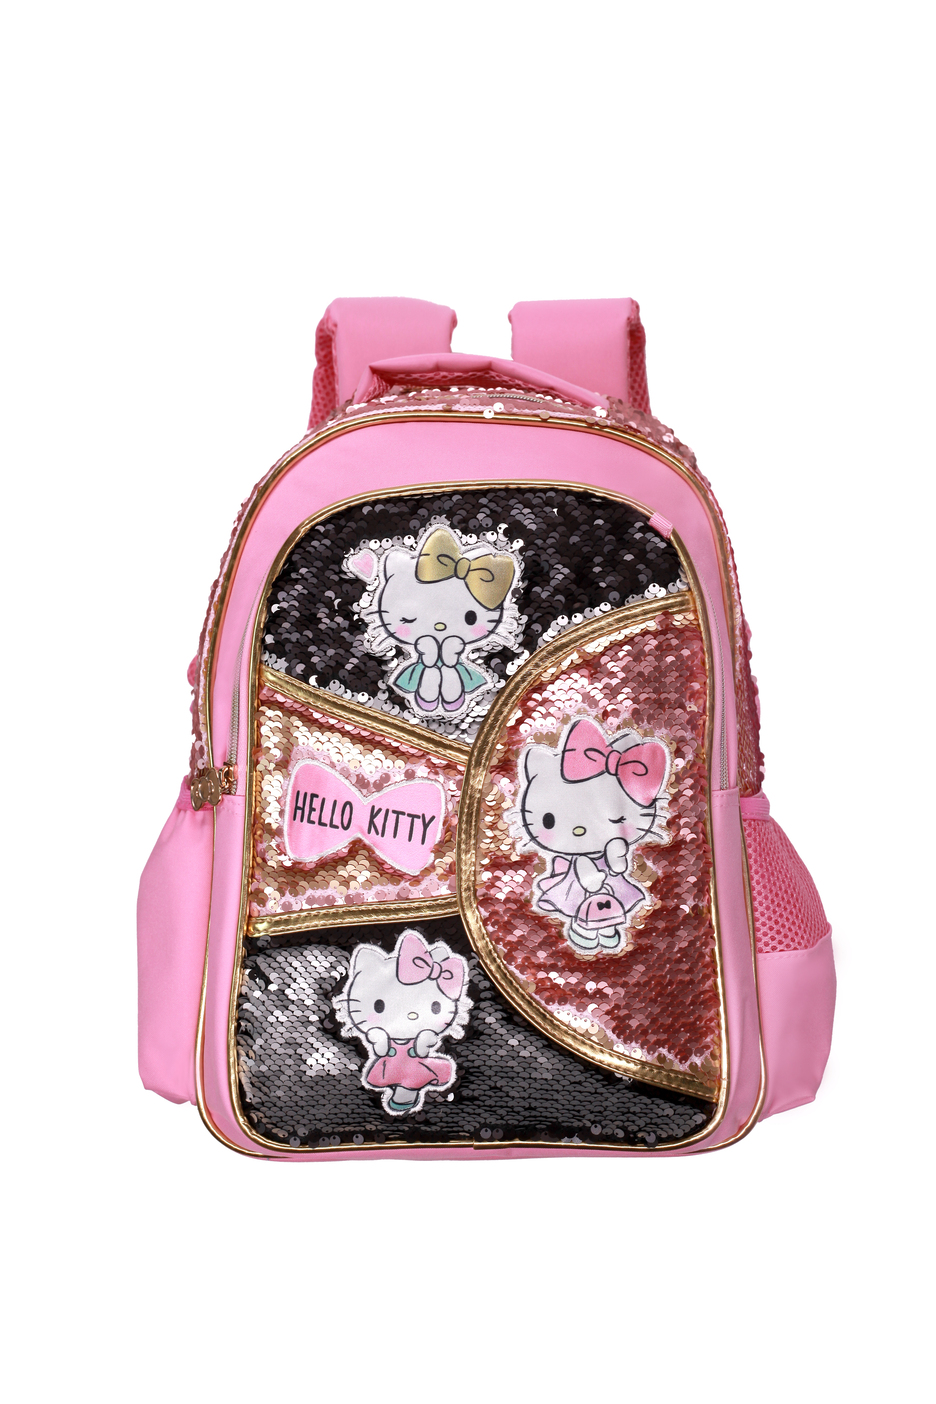 Sanrio hello kitty campus school bag girl zipper large-capacity backpack  cute cartoon handbag travel storage bag - AliExpress